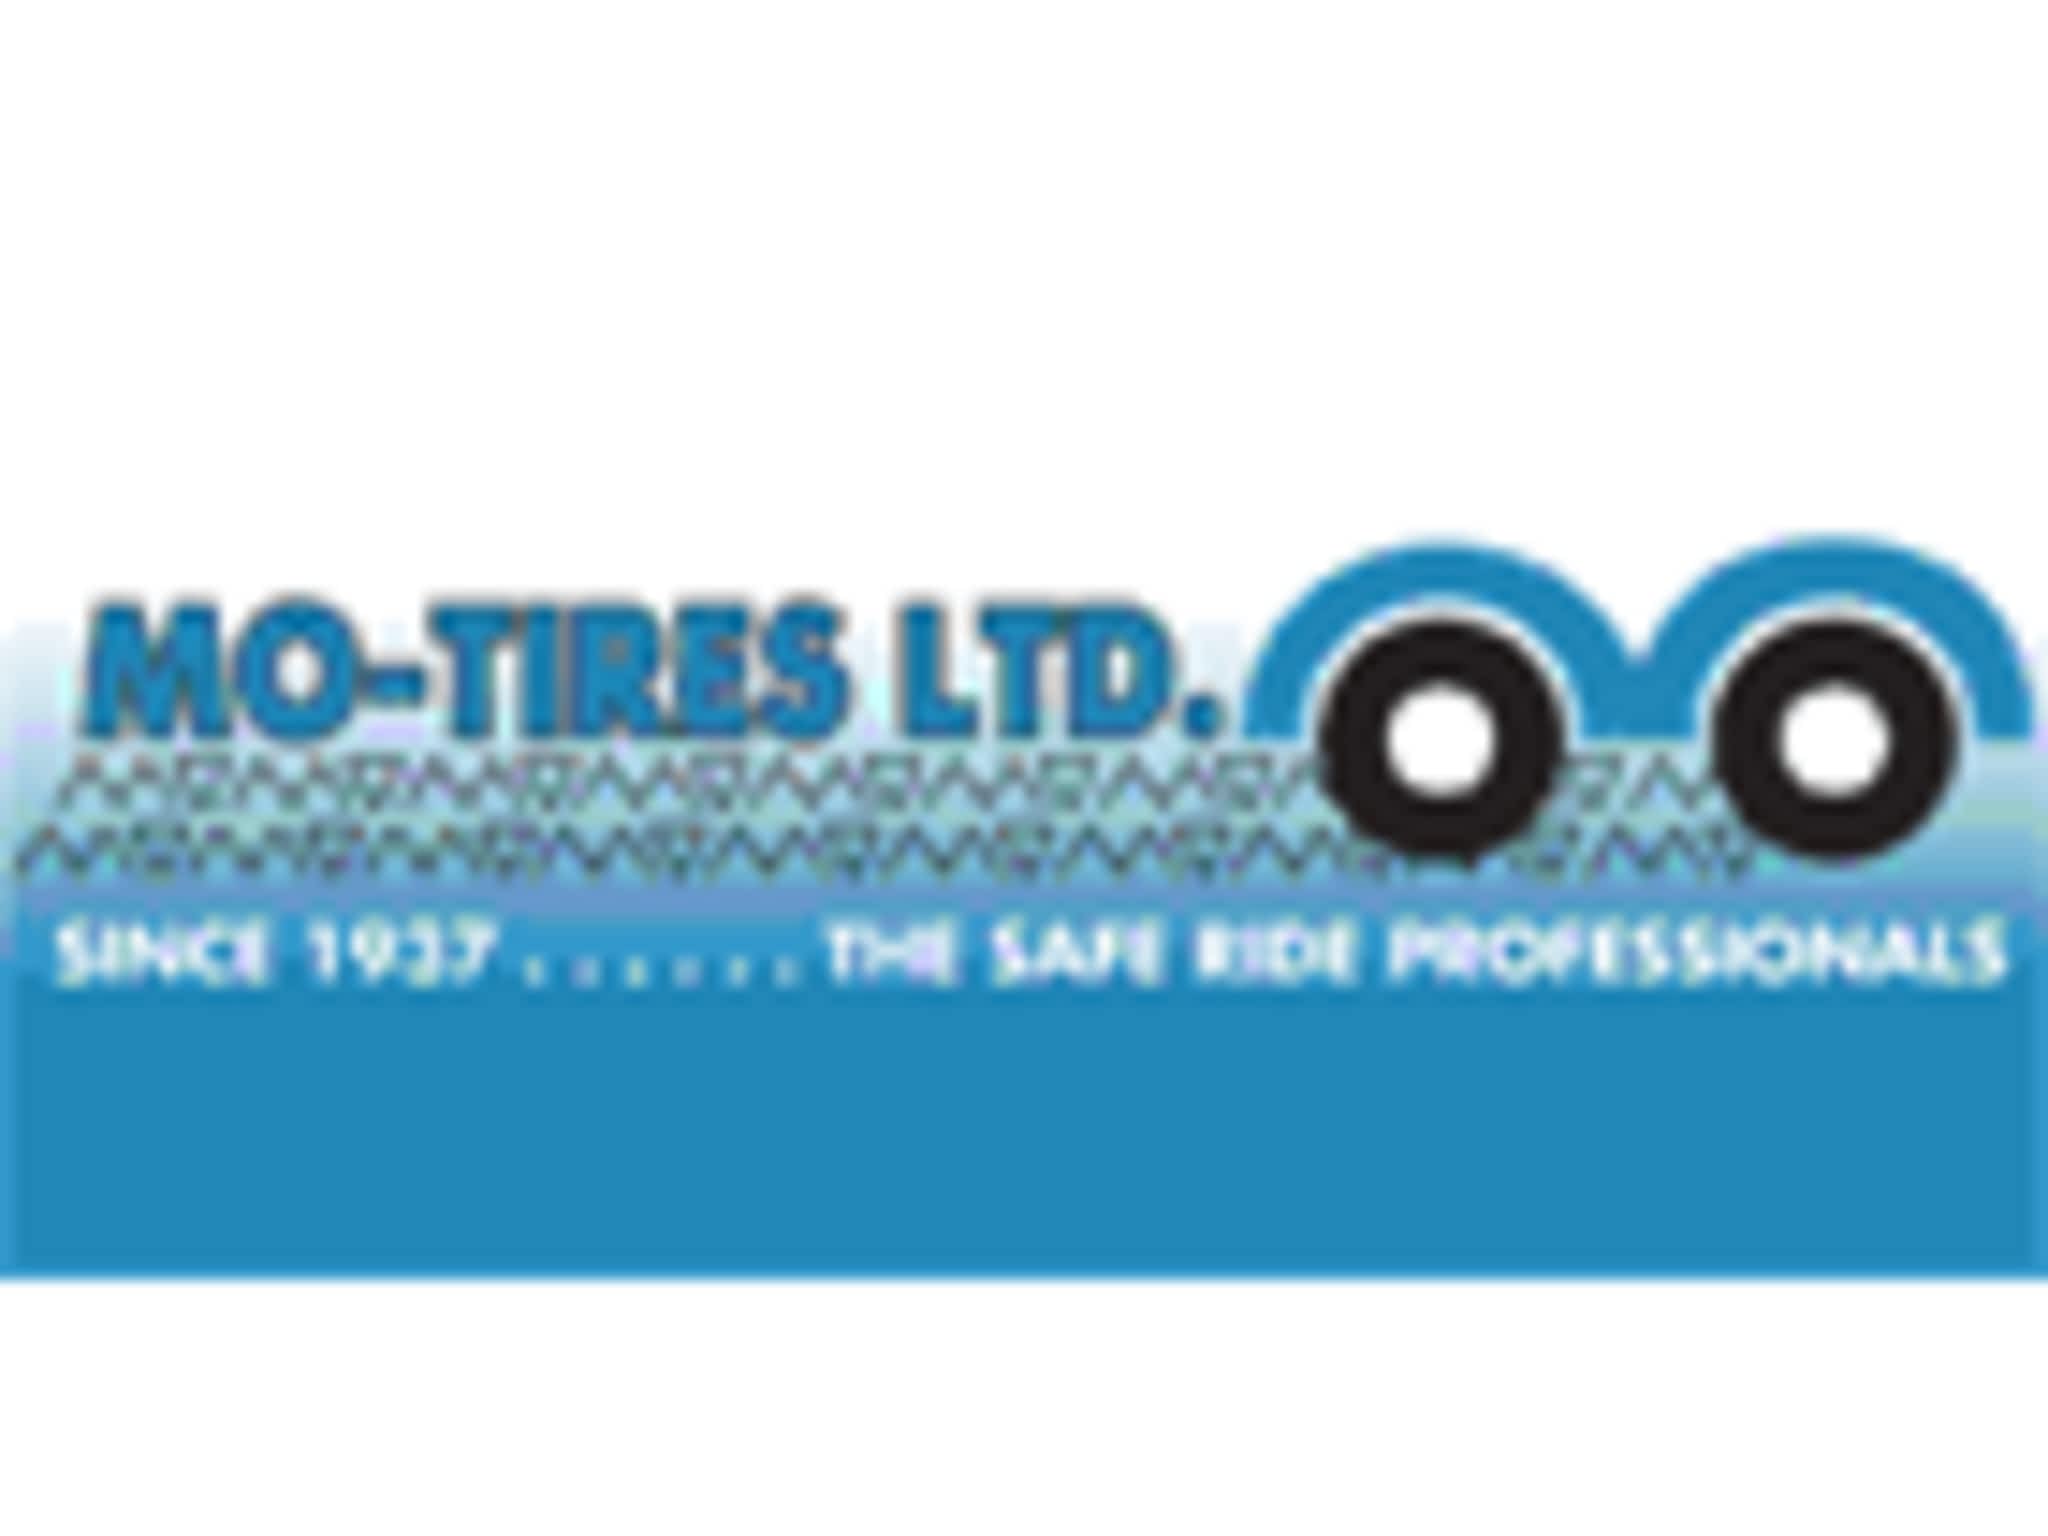 photo Mo-Tires Ltd